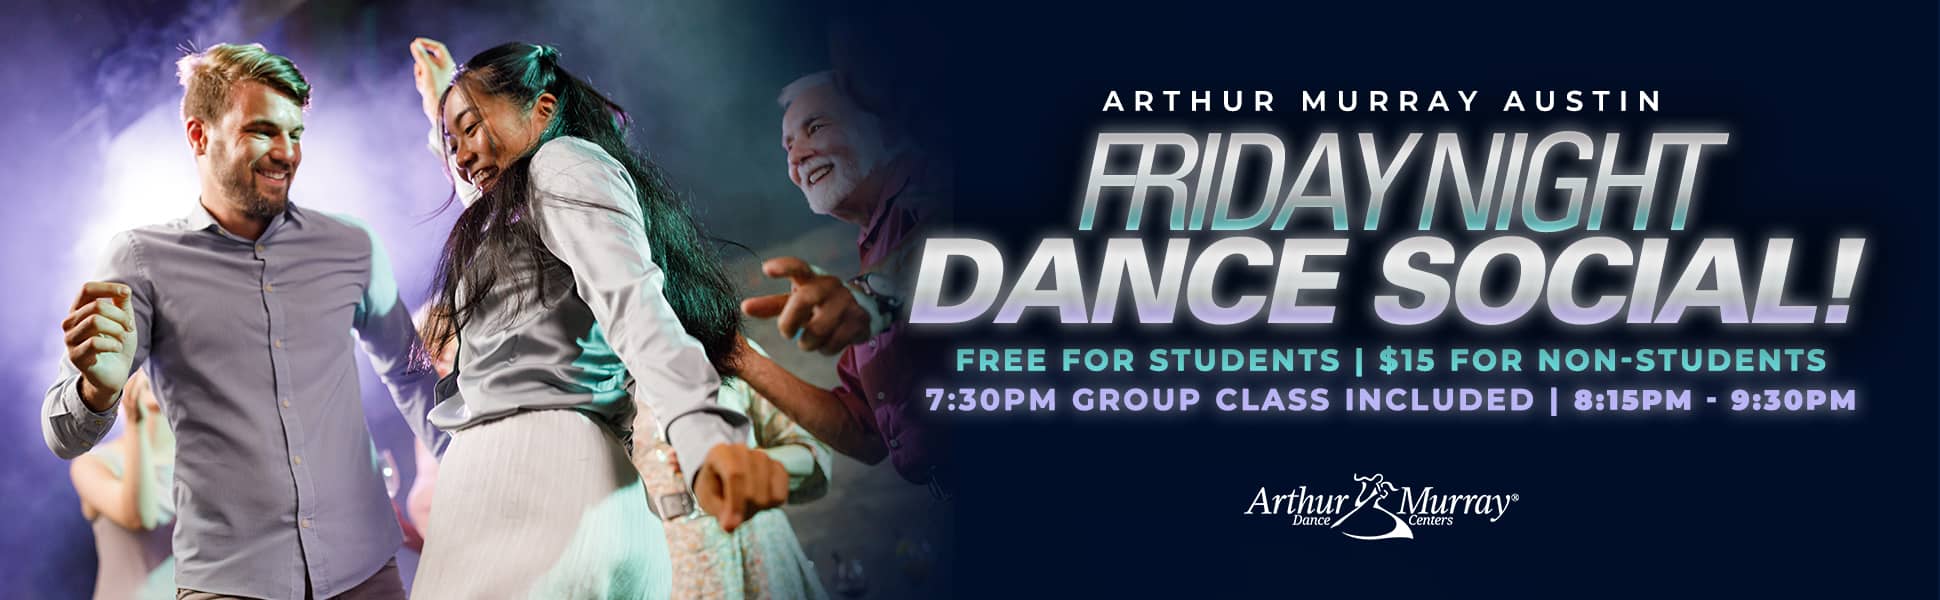 AM Austin Friday Night Dance Social